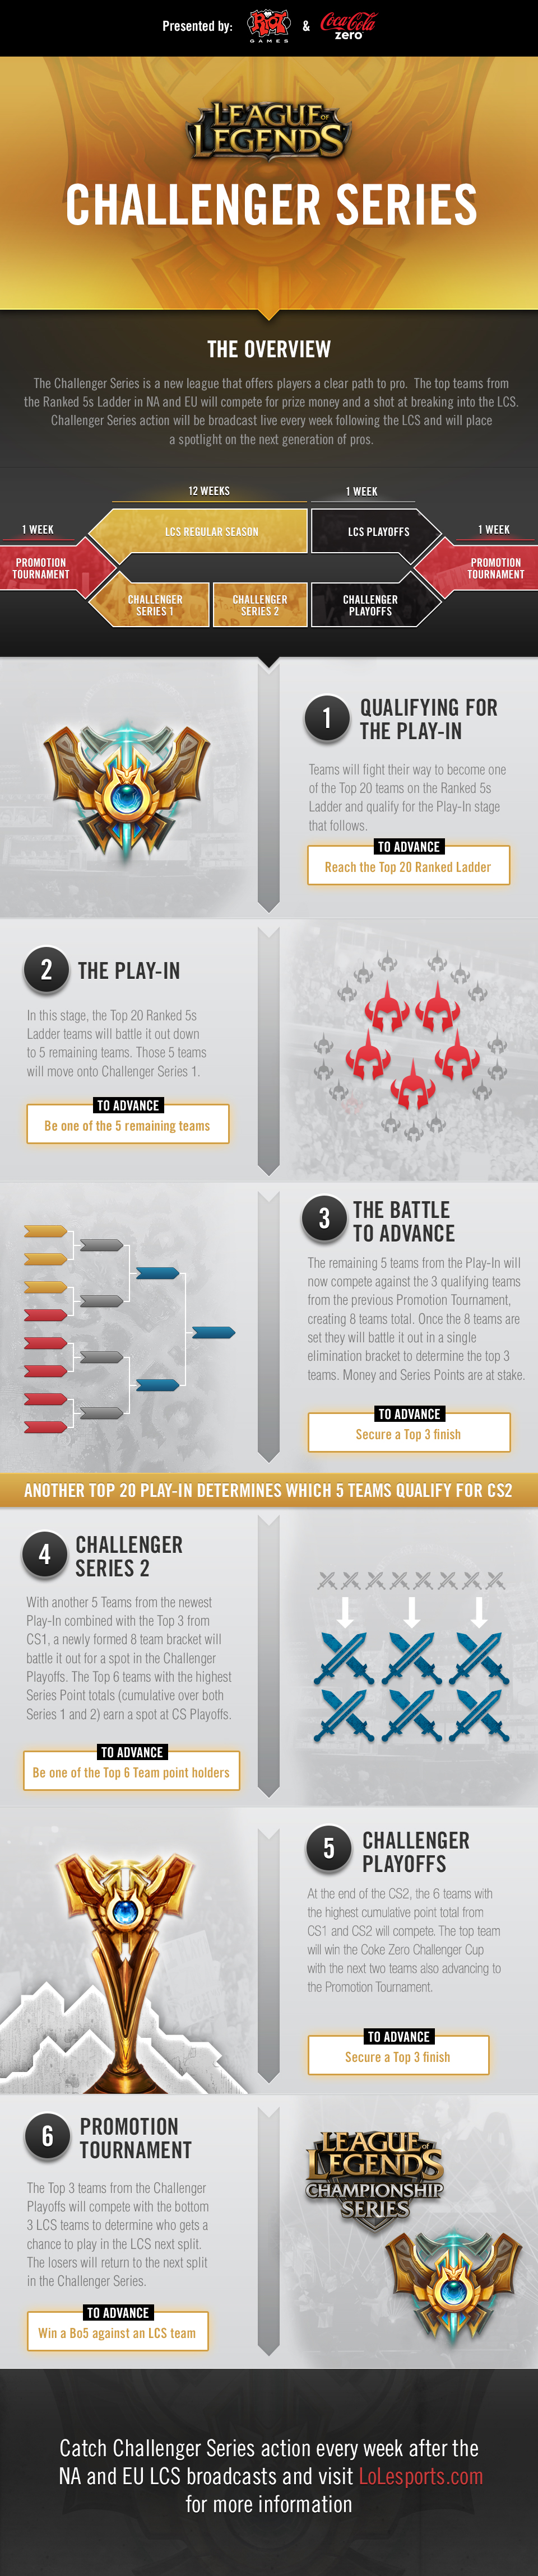 League Of Legends Challenger Series Overview